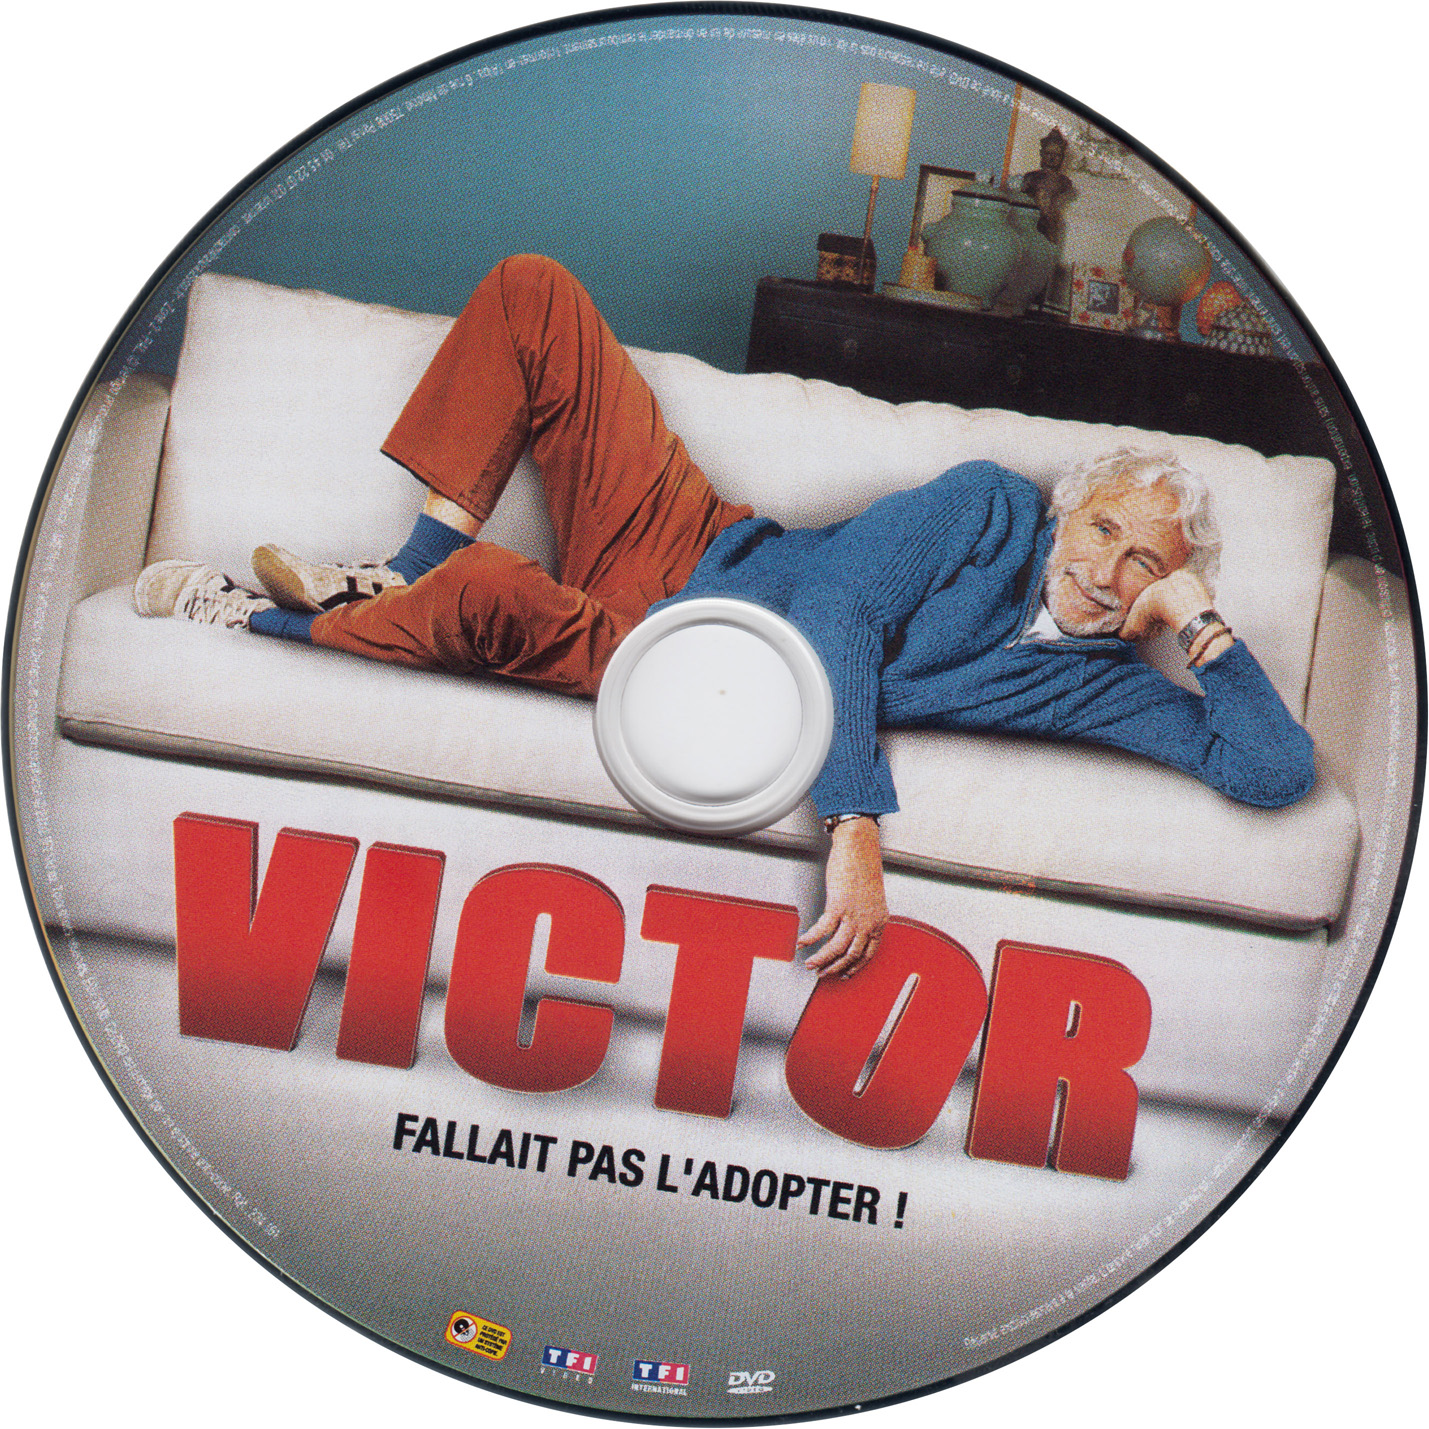 Victor (2009)